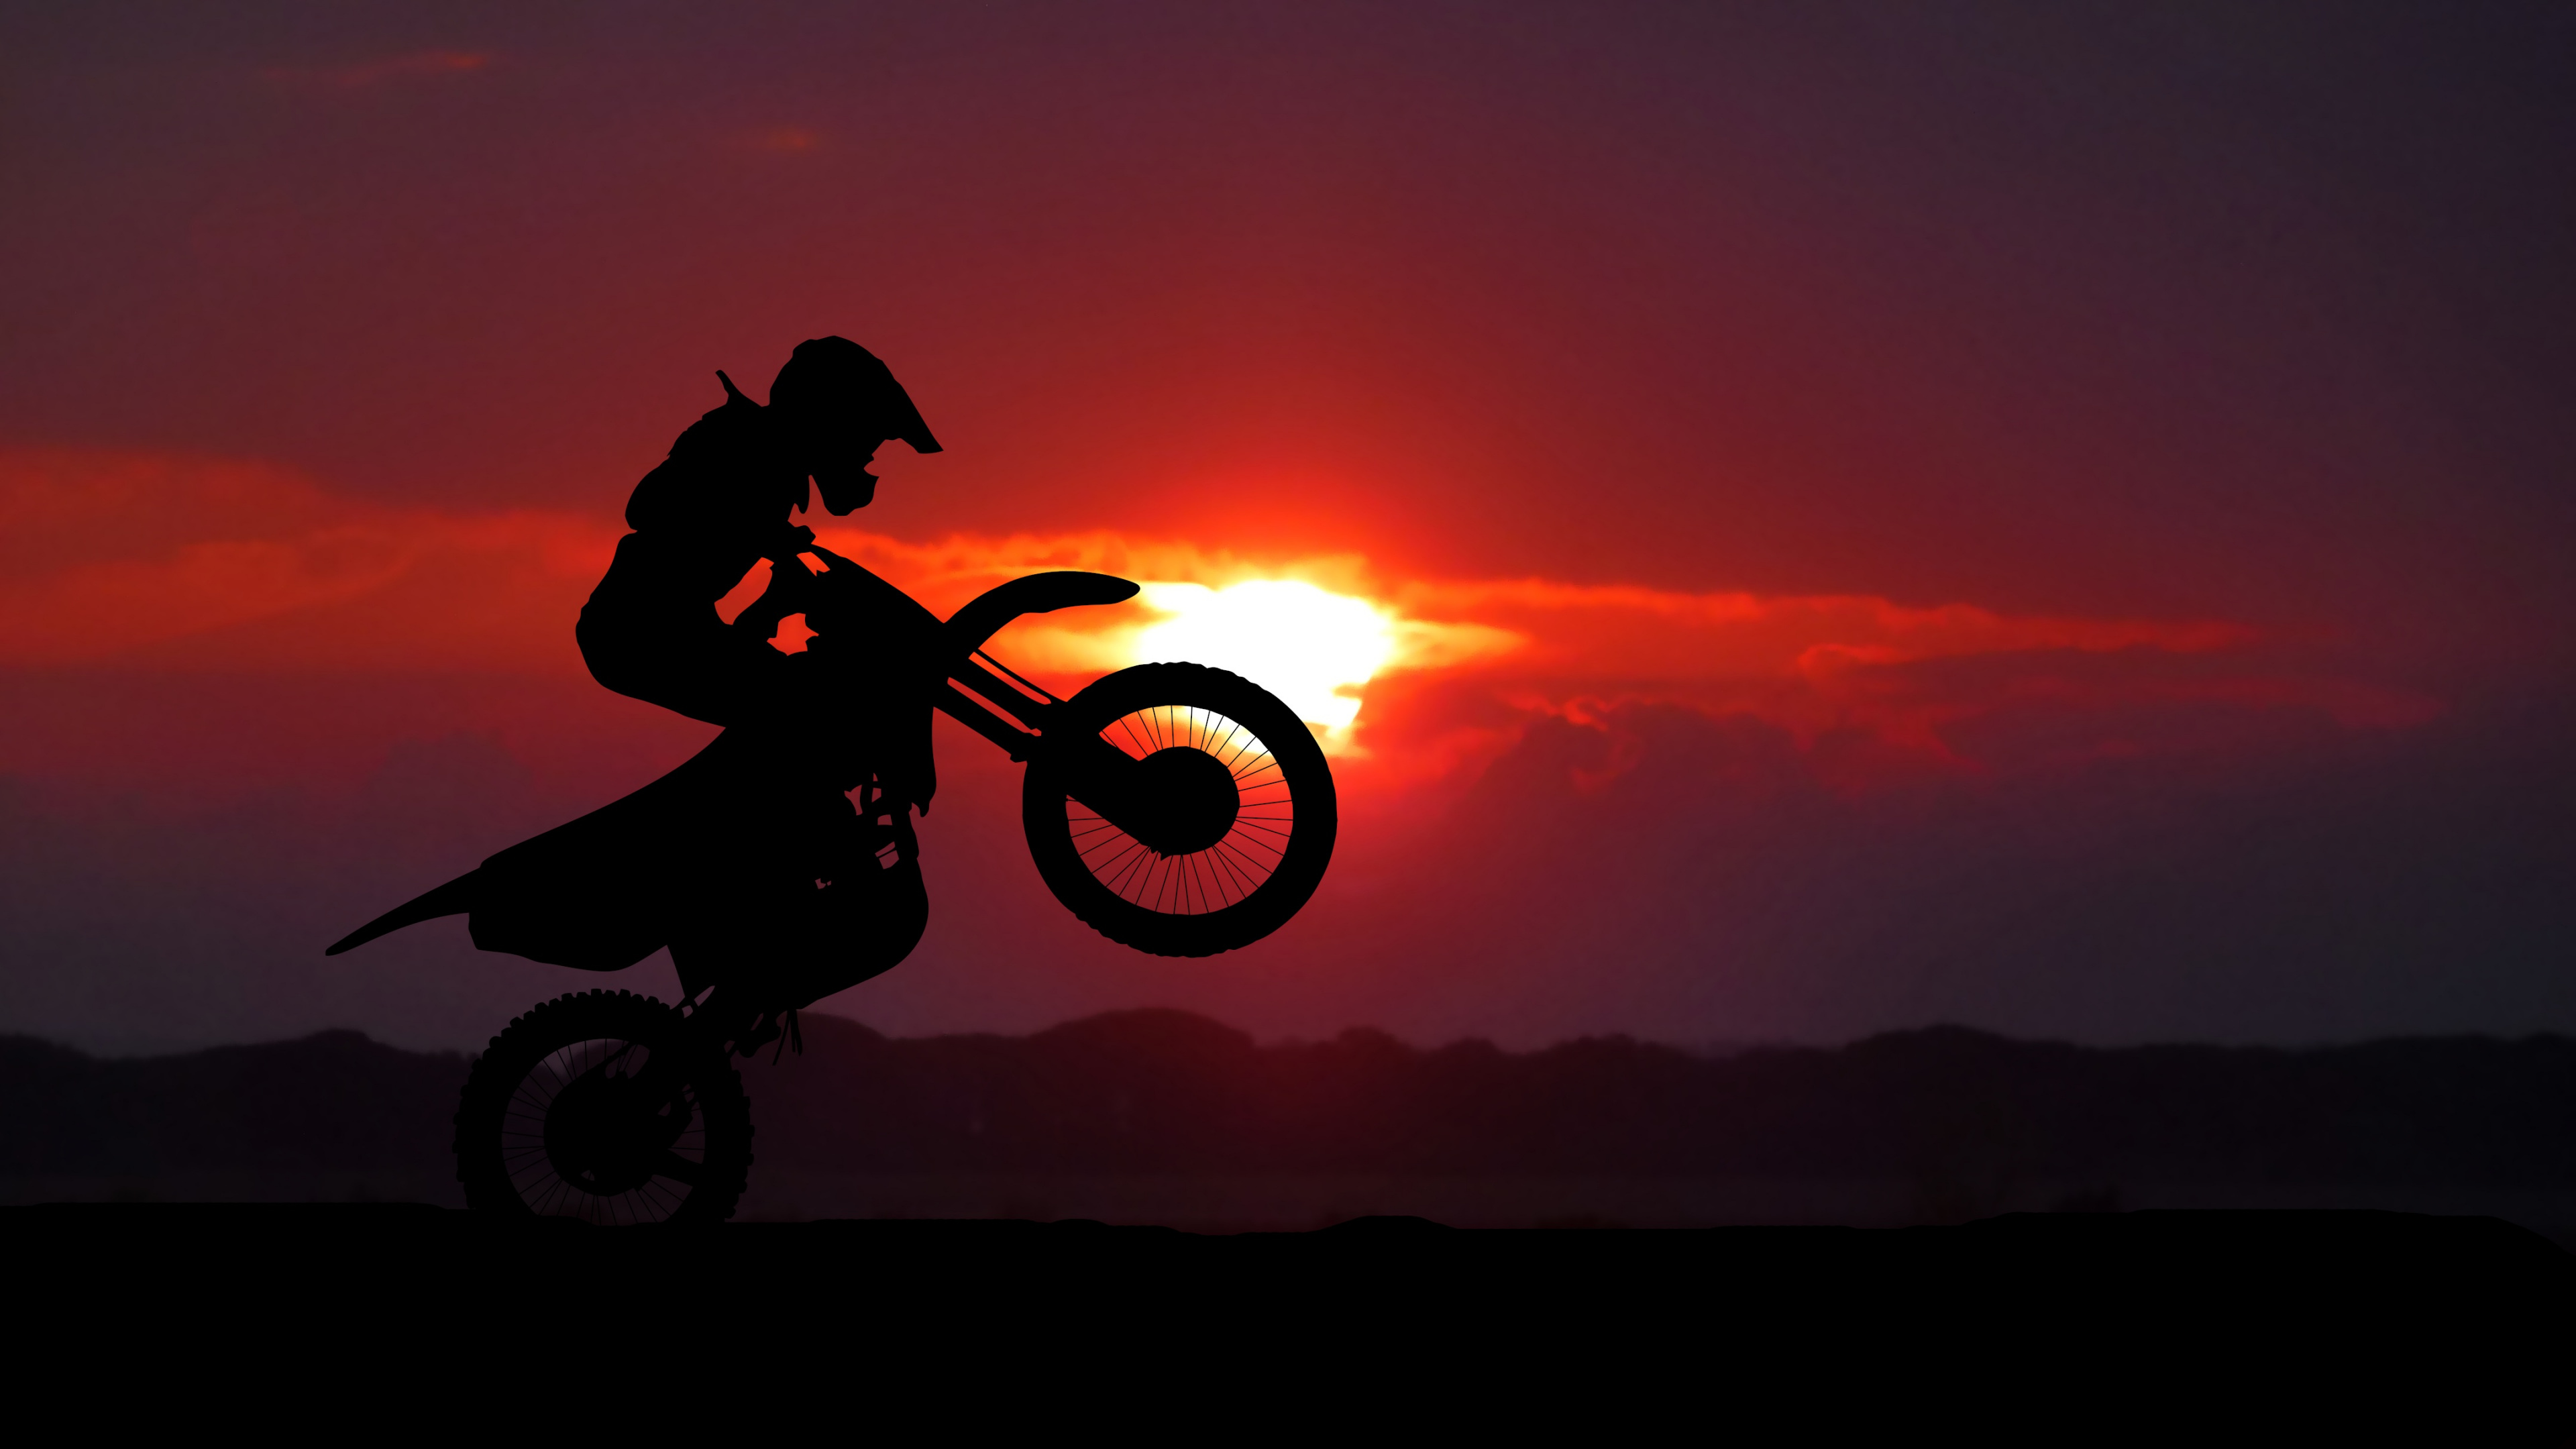 Silhouette of Man Riding Motocross Dirt Bike During Sunset. Wallpaper in 3840x2160 Resolution